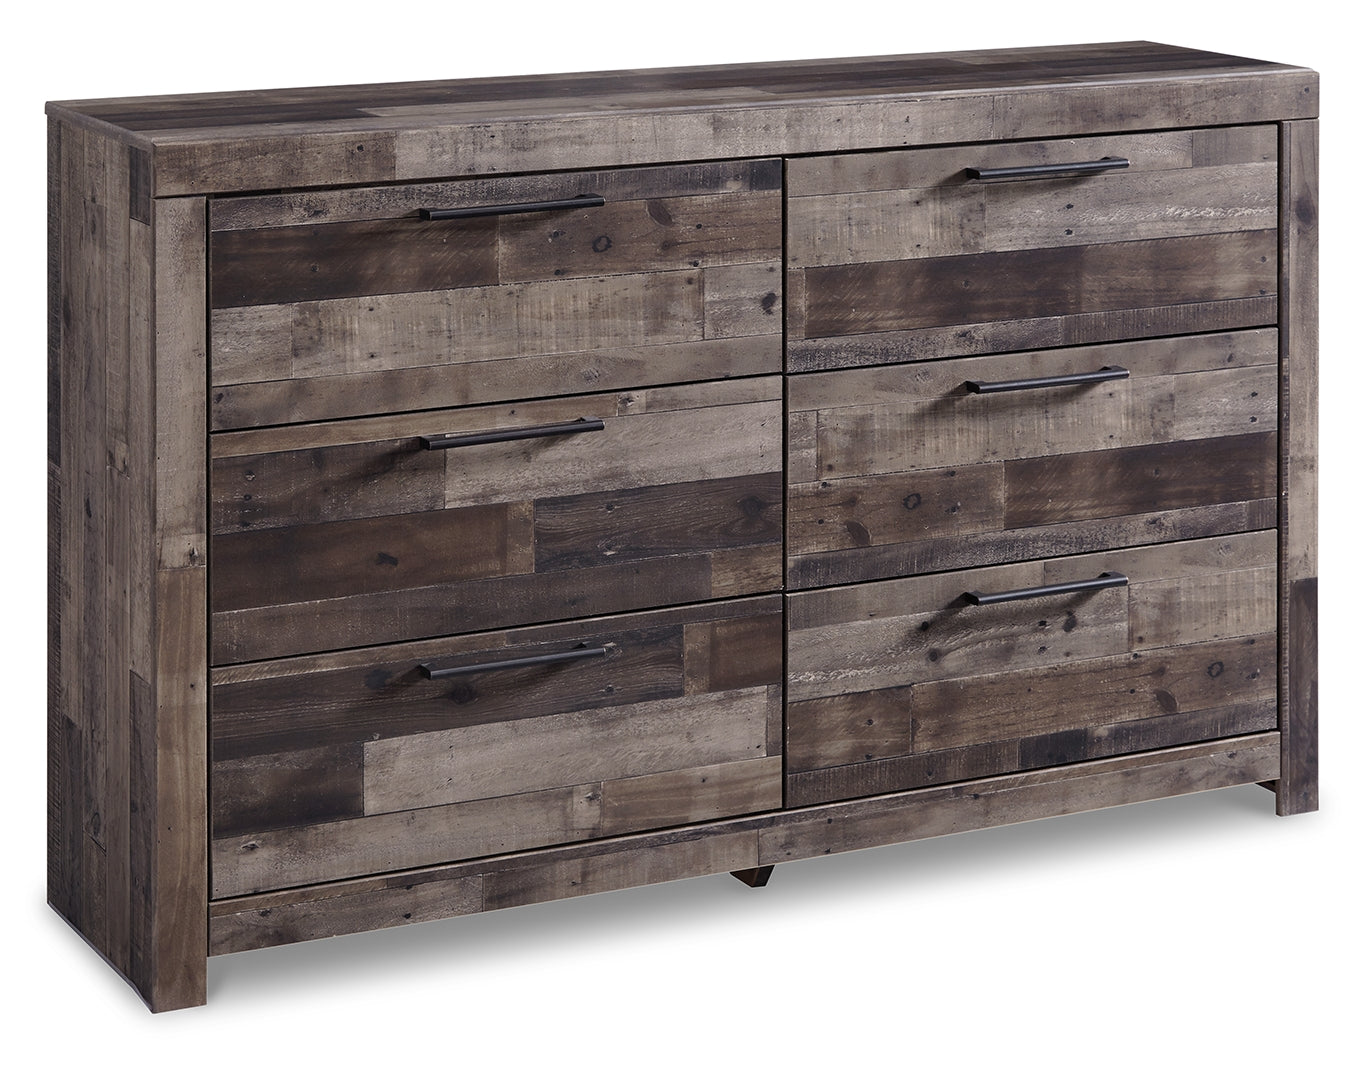 Derekson Queen Panel Bed with 4 Storage Drawers with Dresser